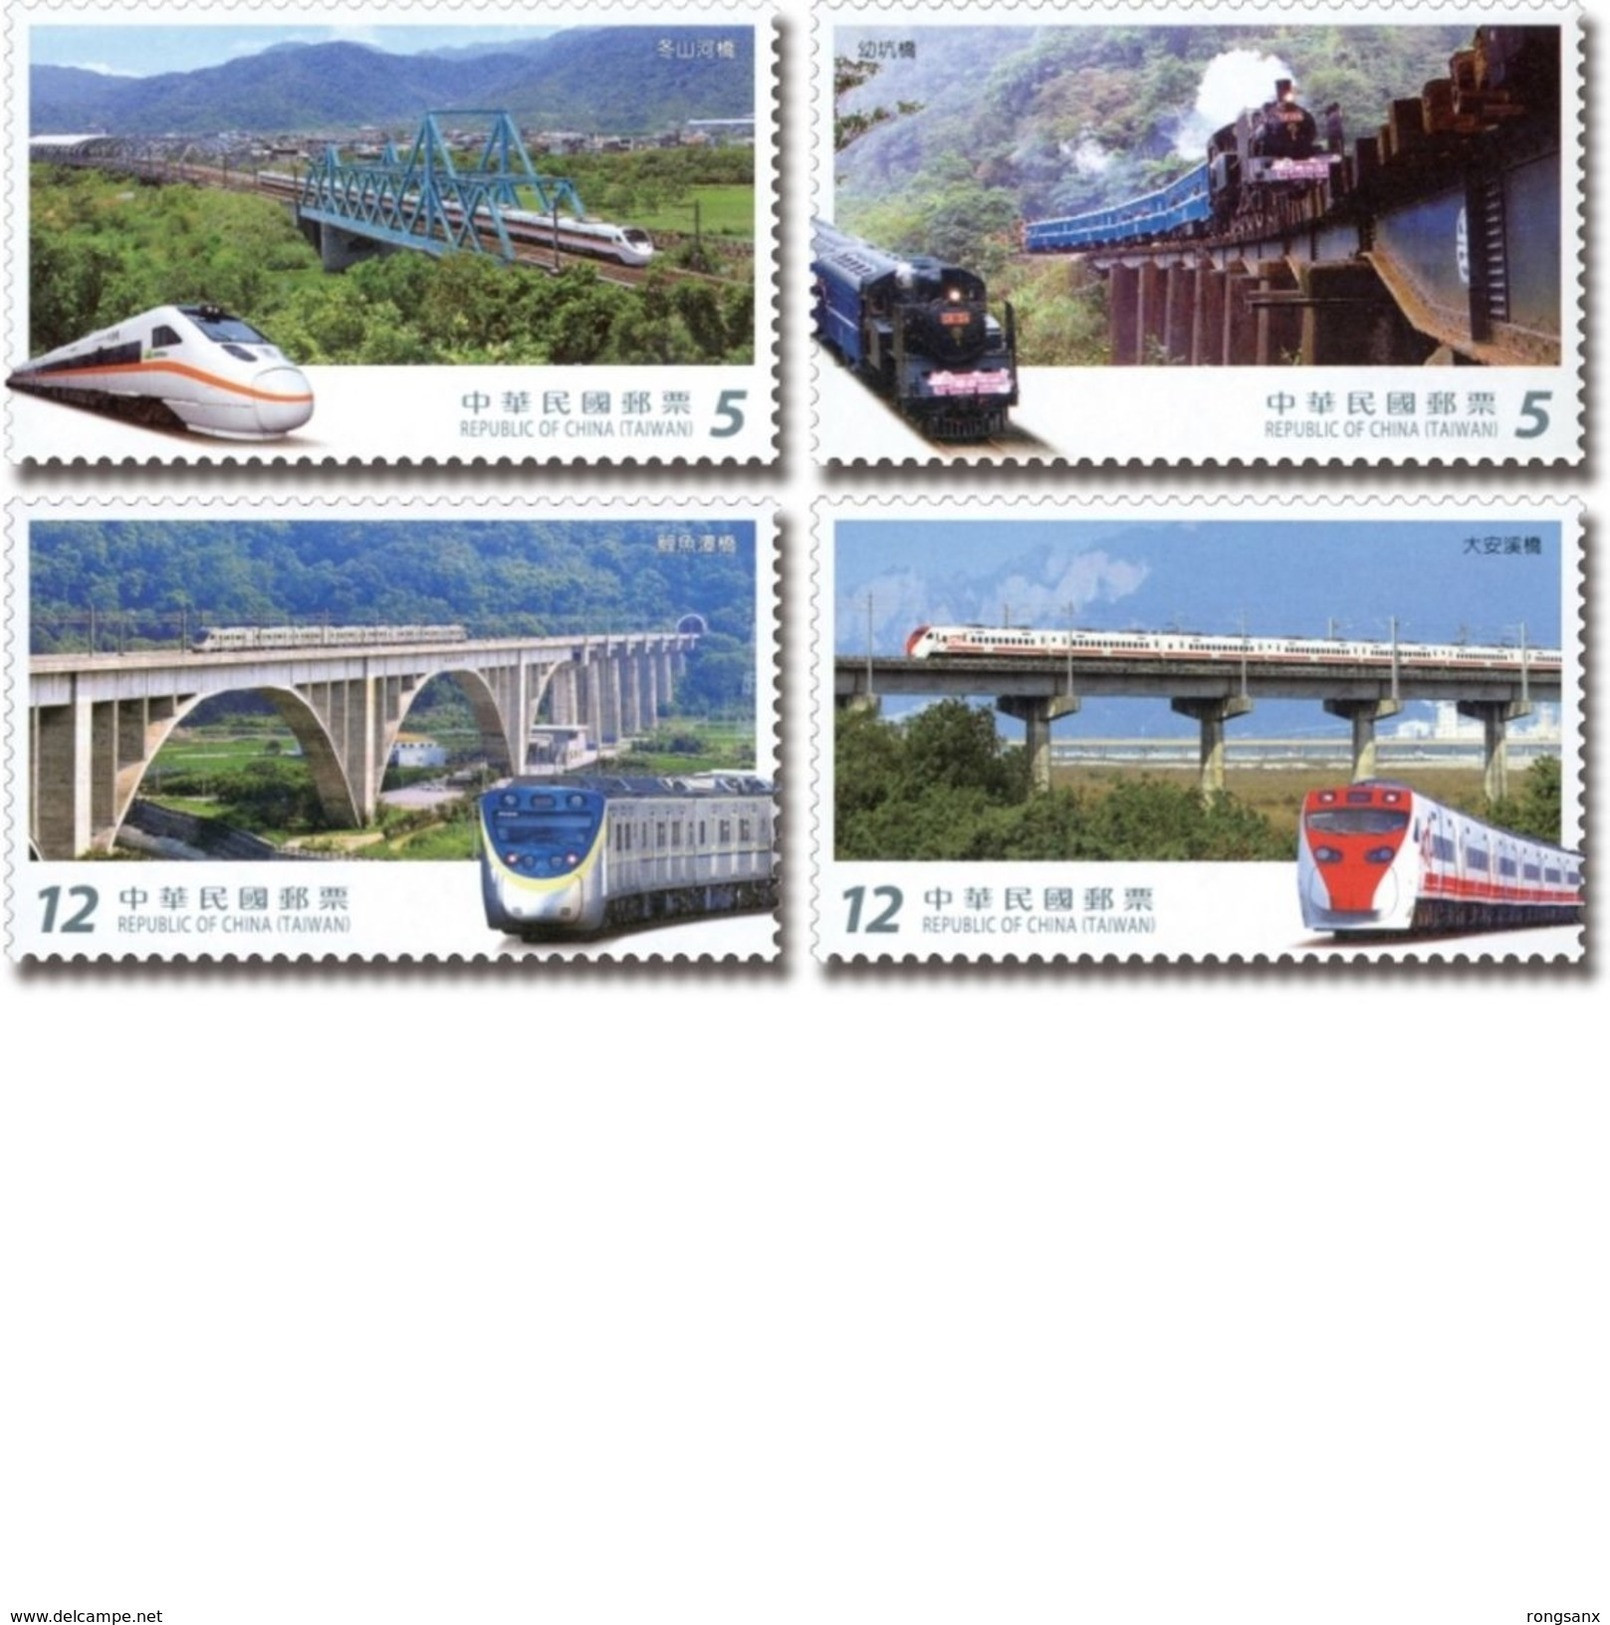 2017 TAIWAN RAILWAY BRIDGES STAMP 4V - Unused Stamps